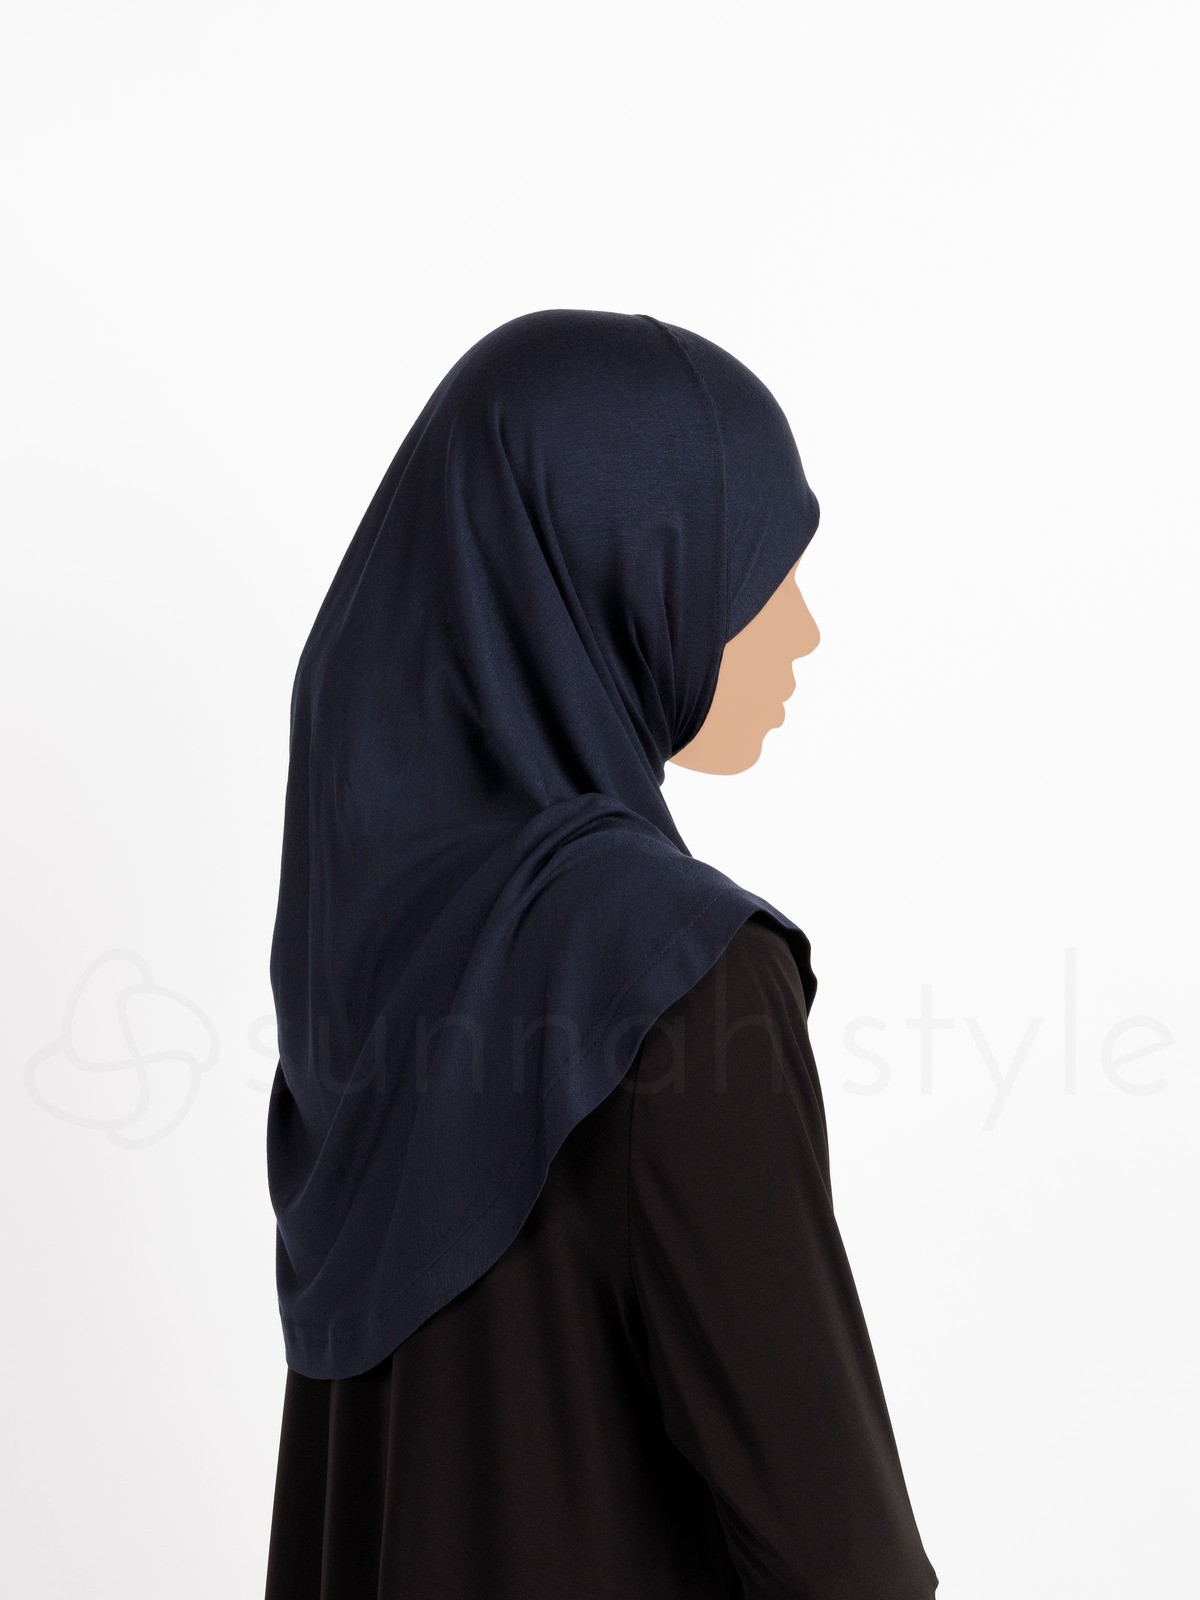 Sunnah Style - Girls Urban Hijab (Navy Blue)